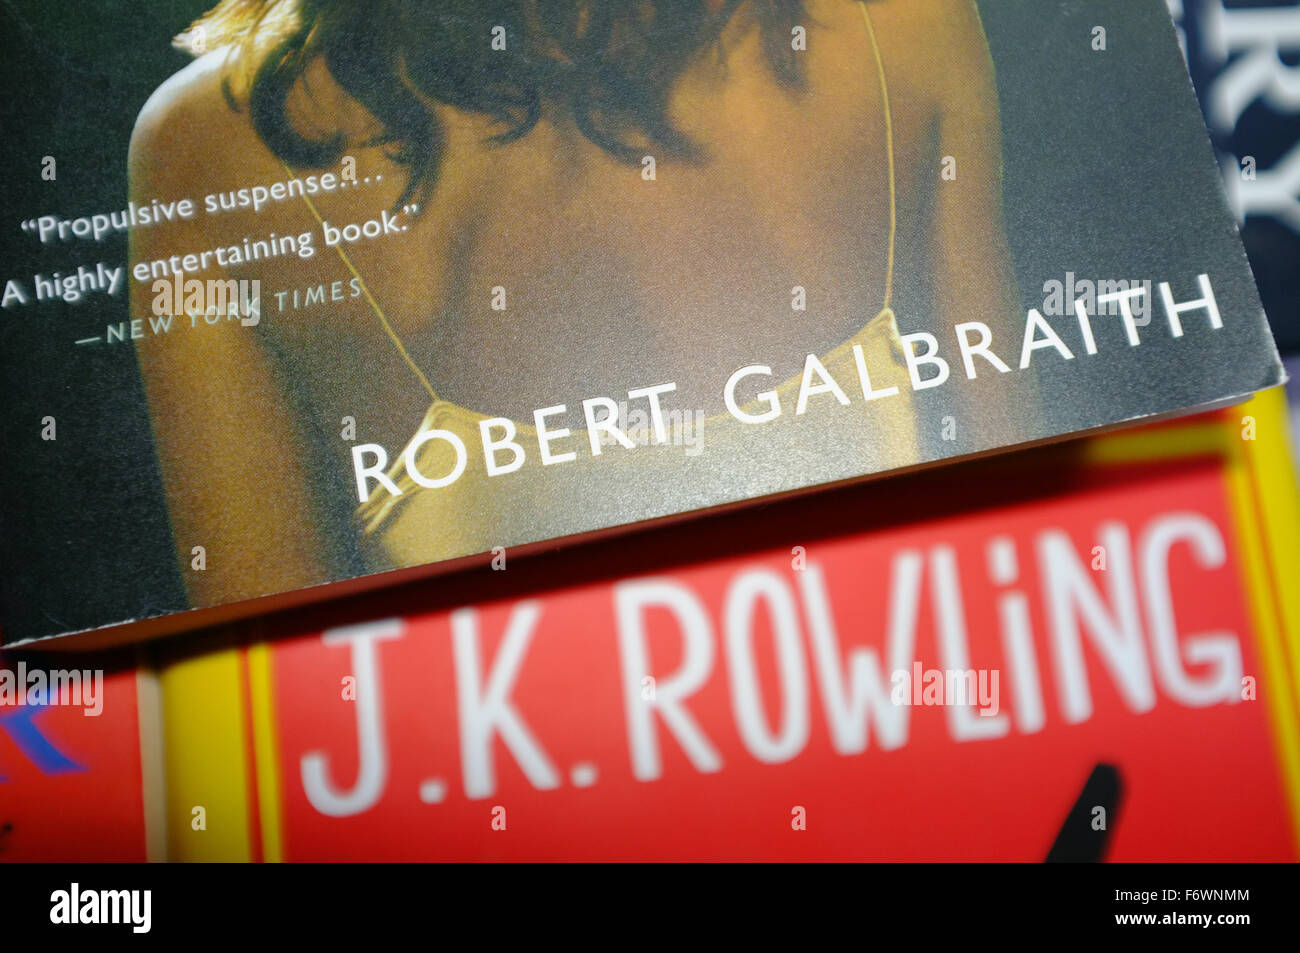 A Robert Galbraith book on top of a J.K. Rowling book. Stock Photo